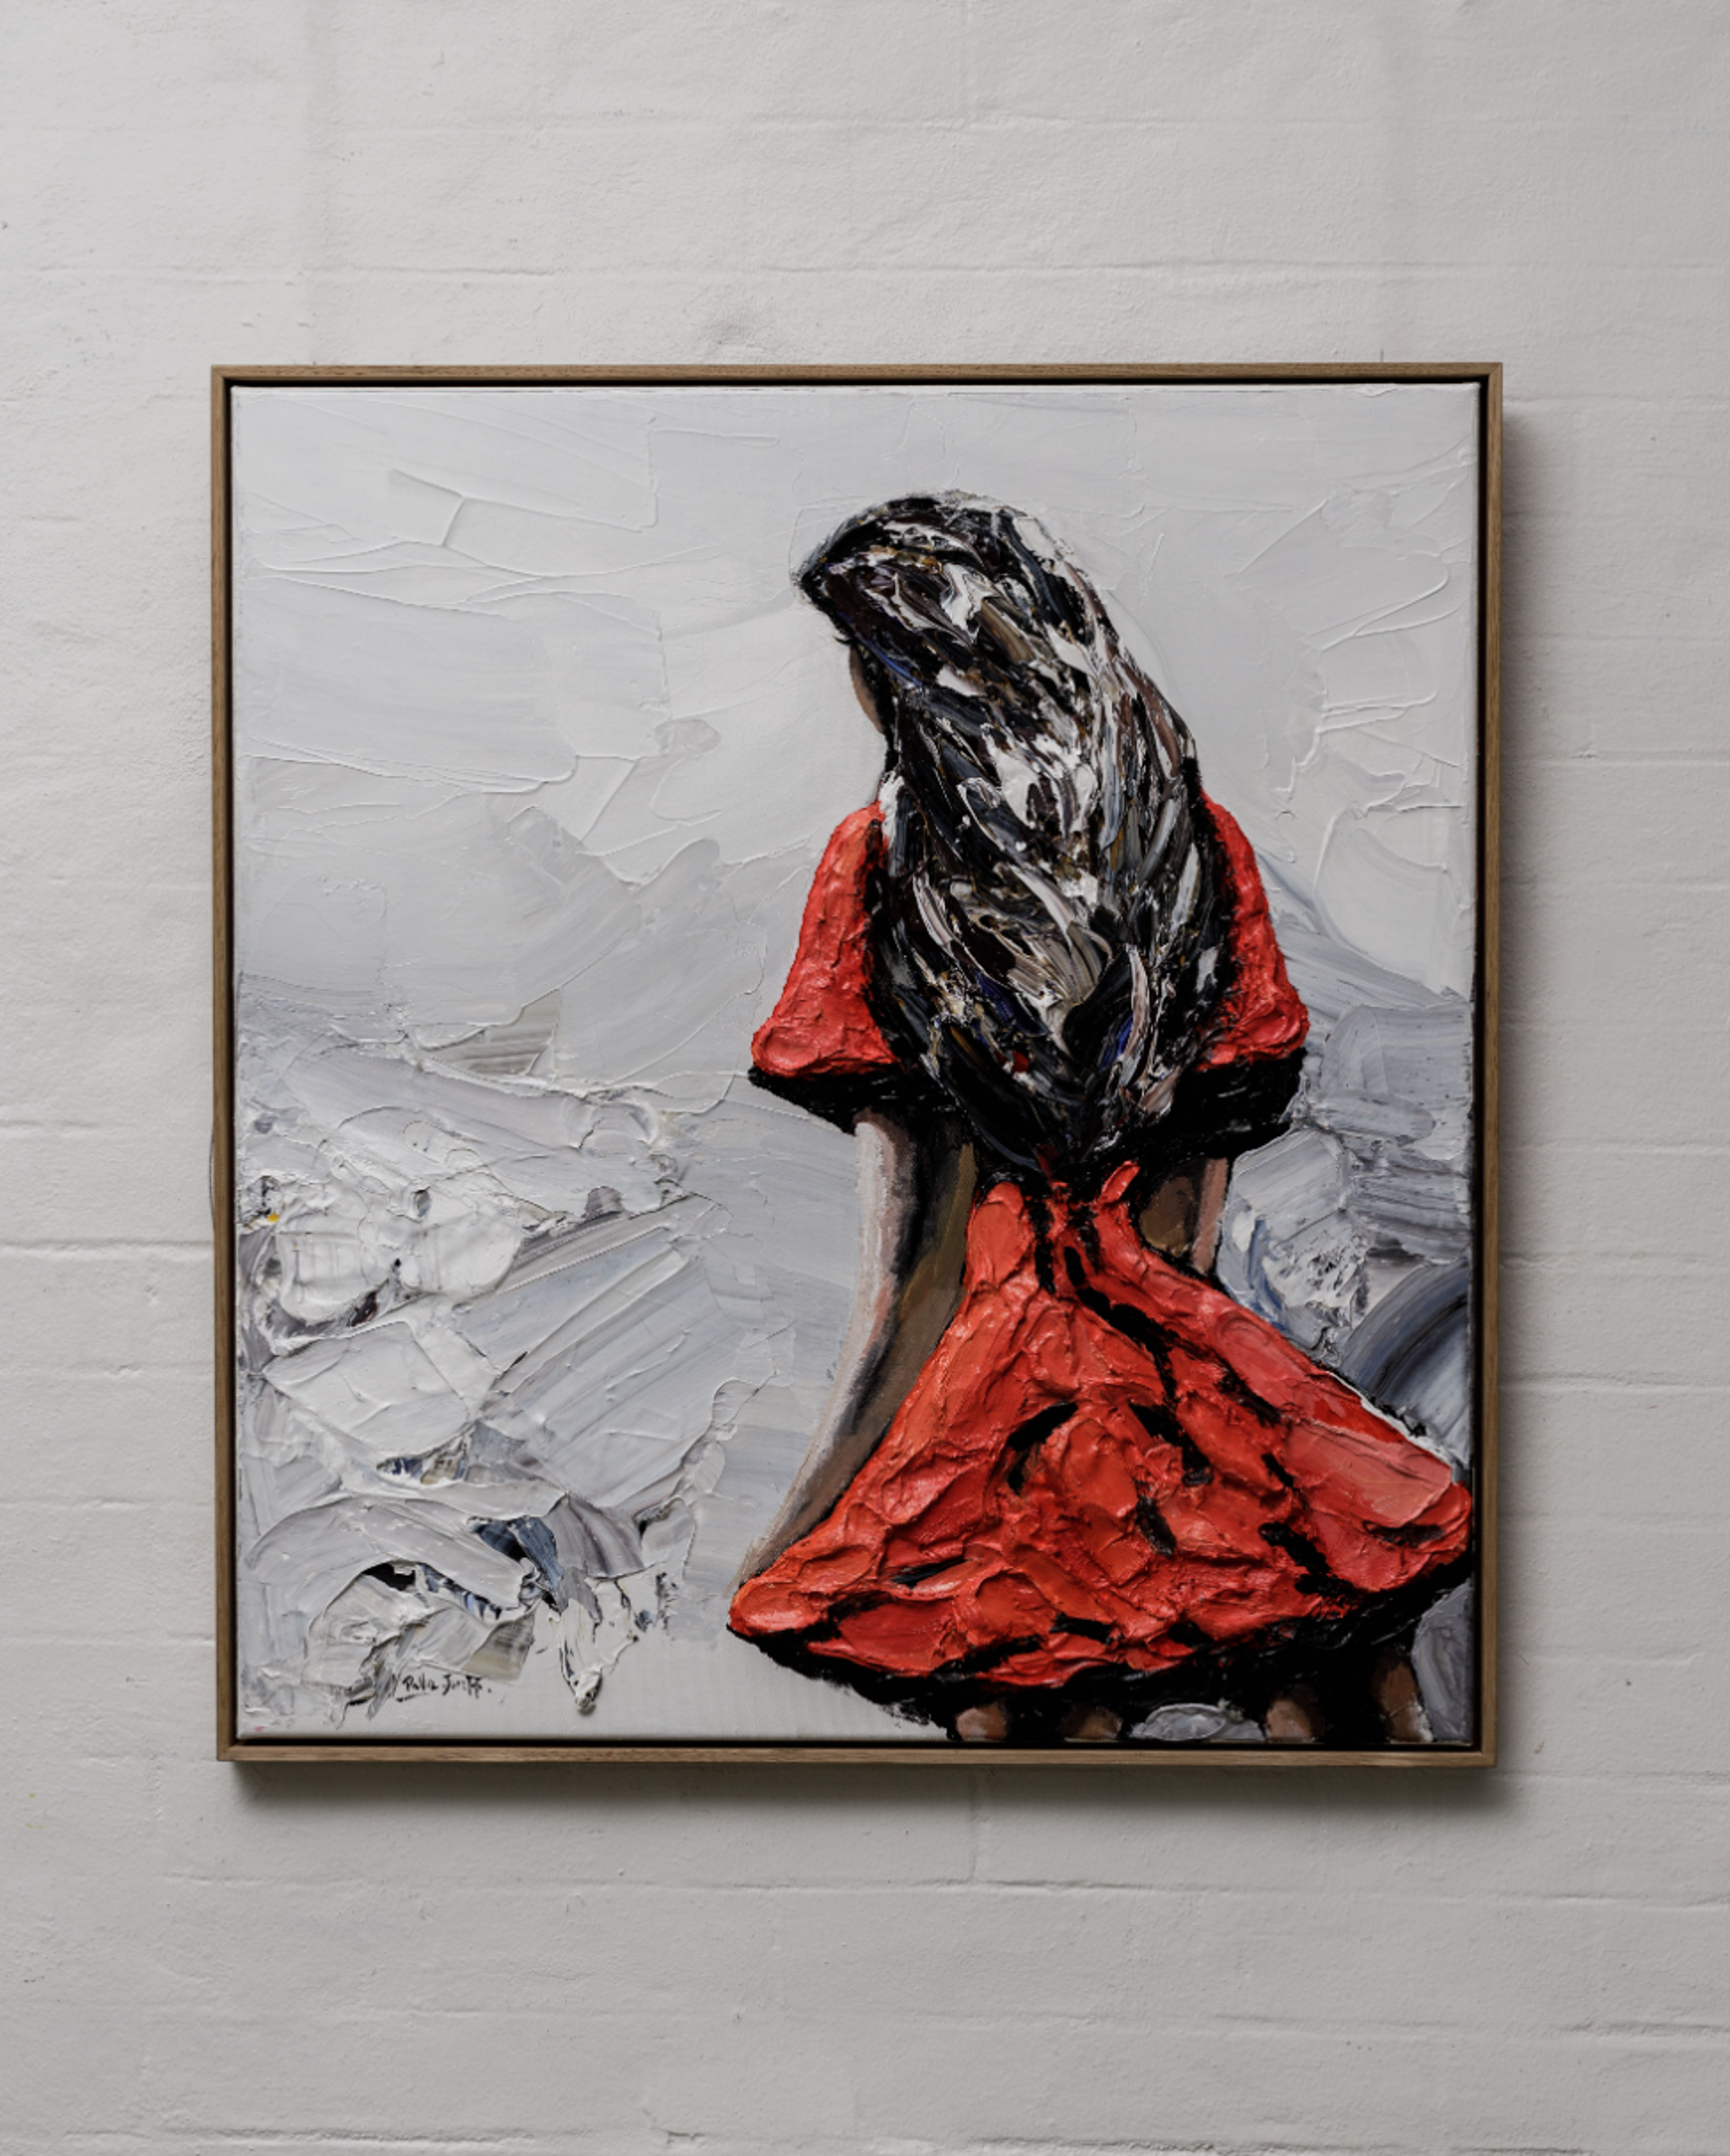 Red Desert Girl by Palla Jeroff